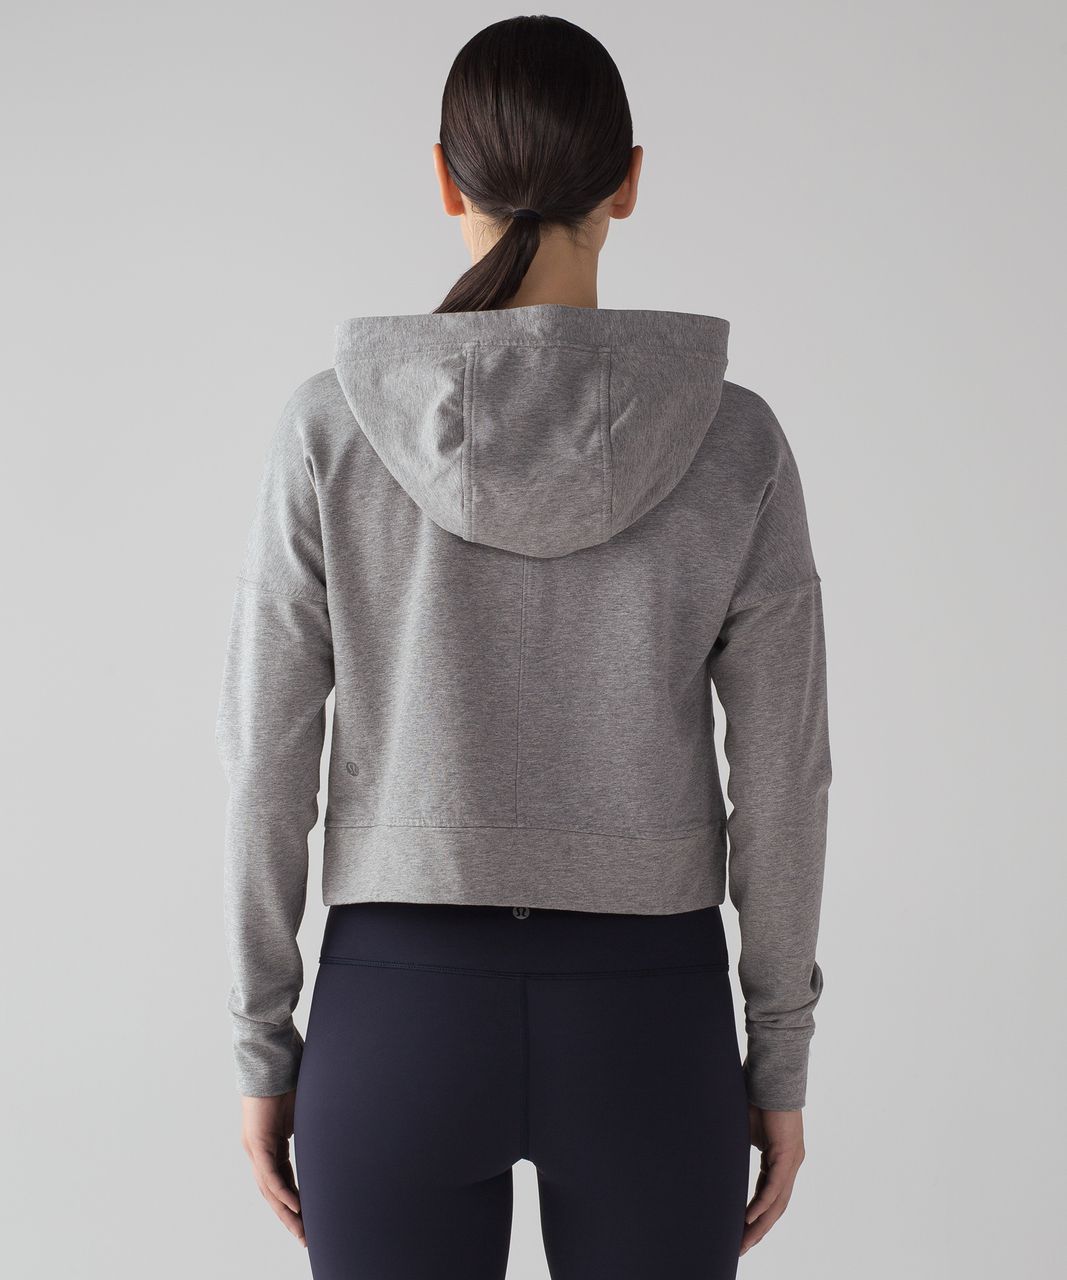 Lululemon Lululemon Hoodie Womens 12 Gray Zip Up Sweater Jacket Sweatshirt  Athletic Gym ^